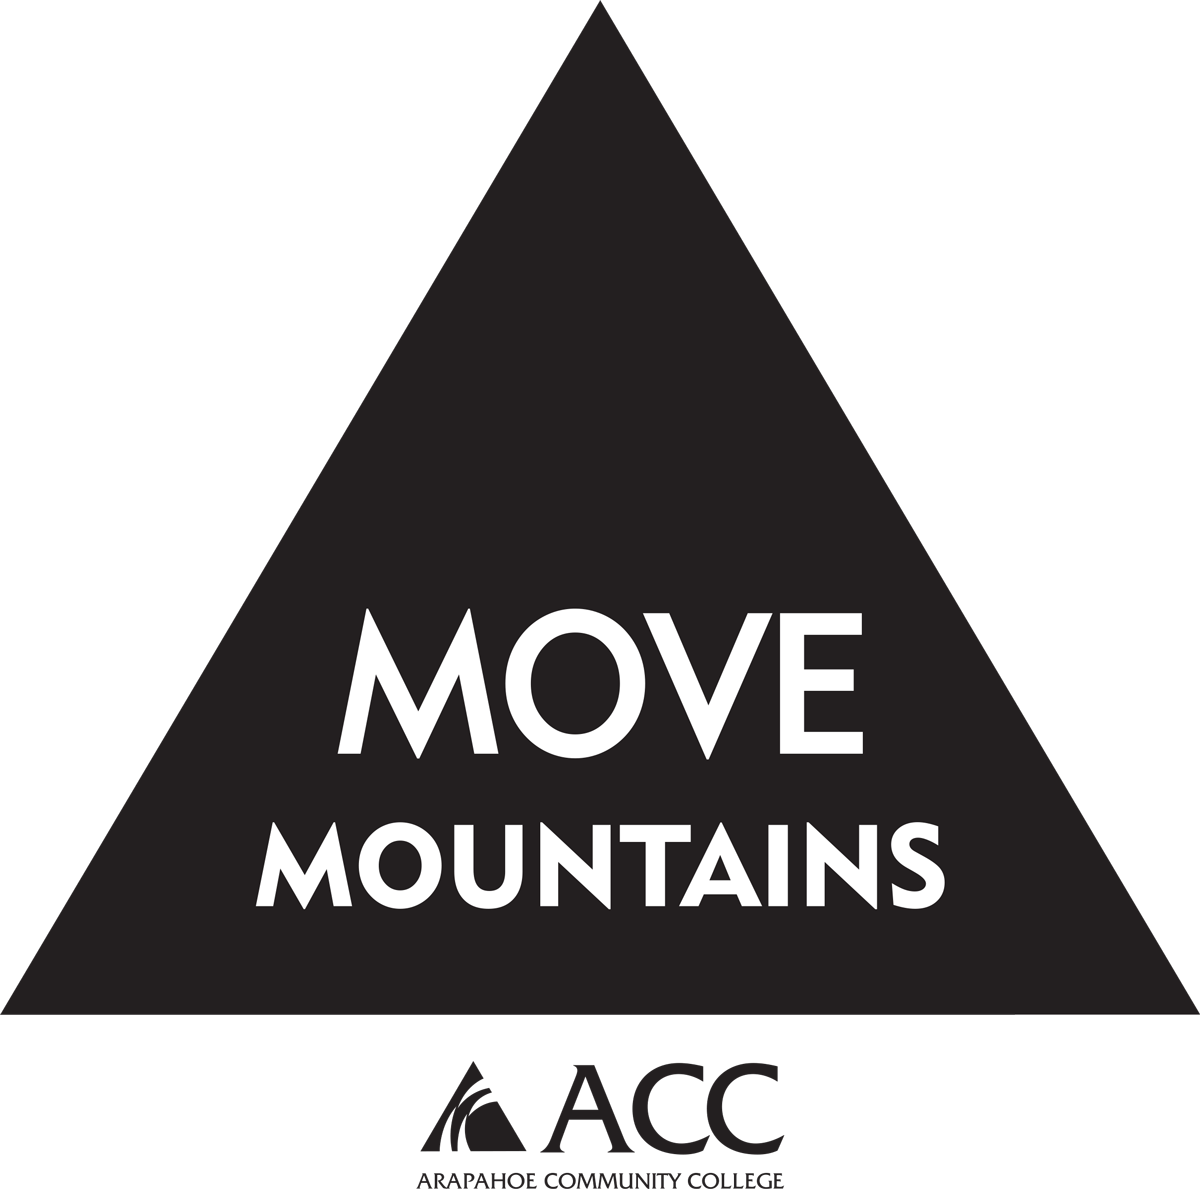 Move Mountains logo black